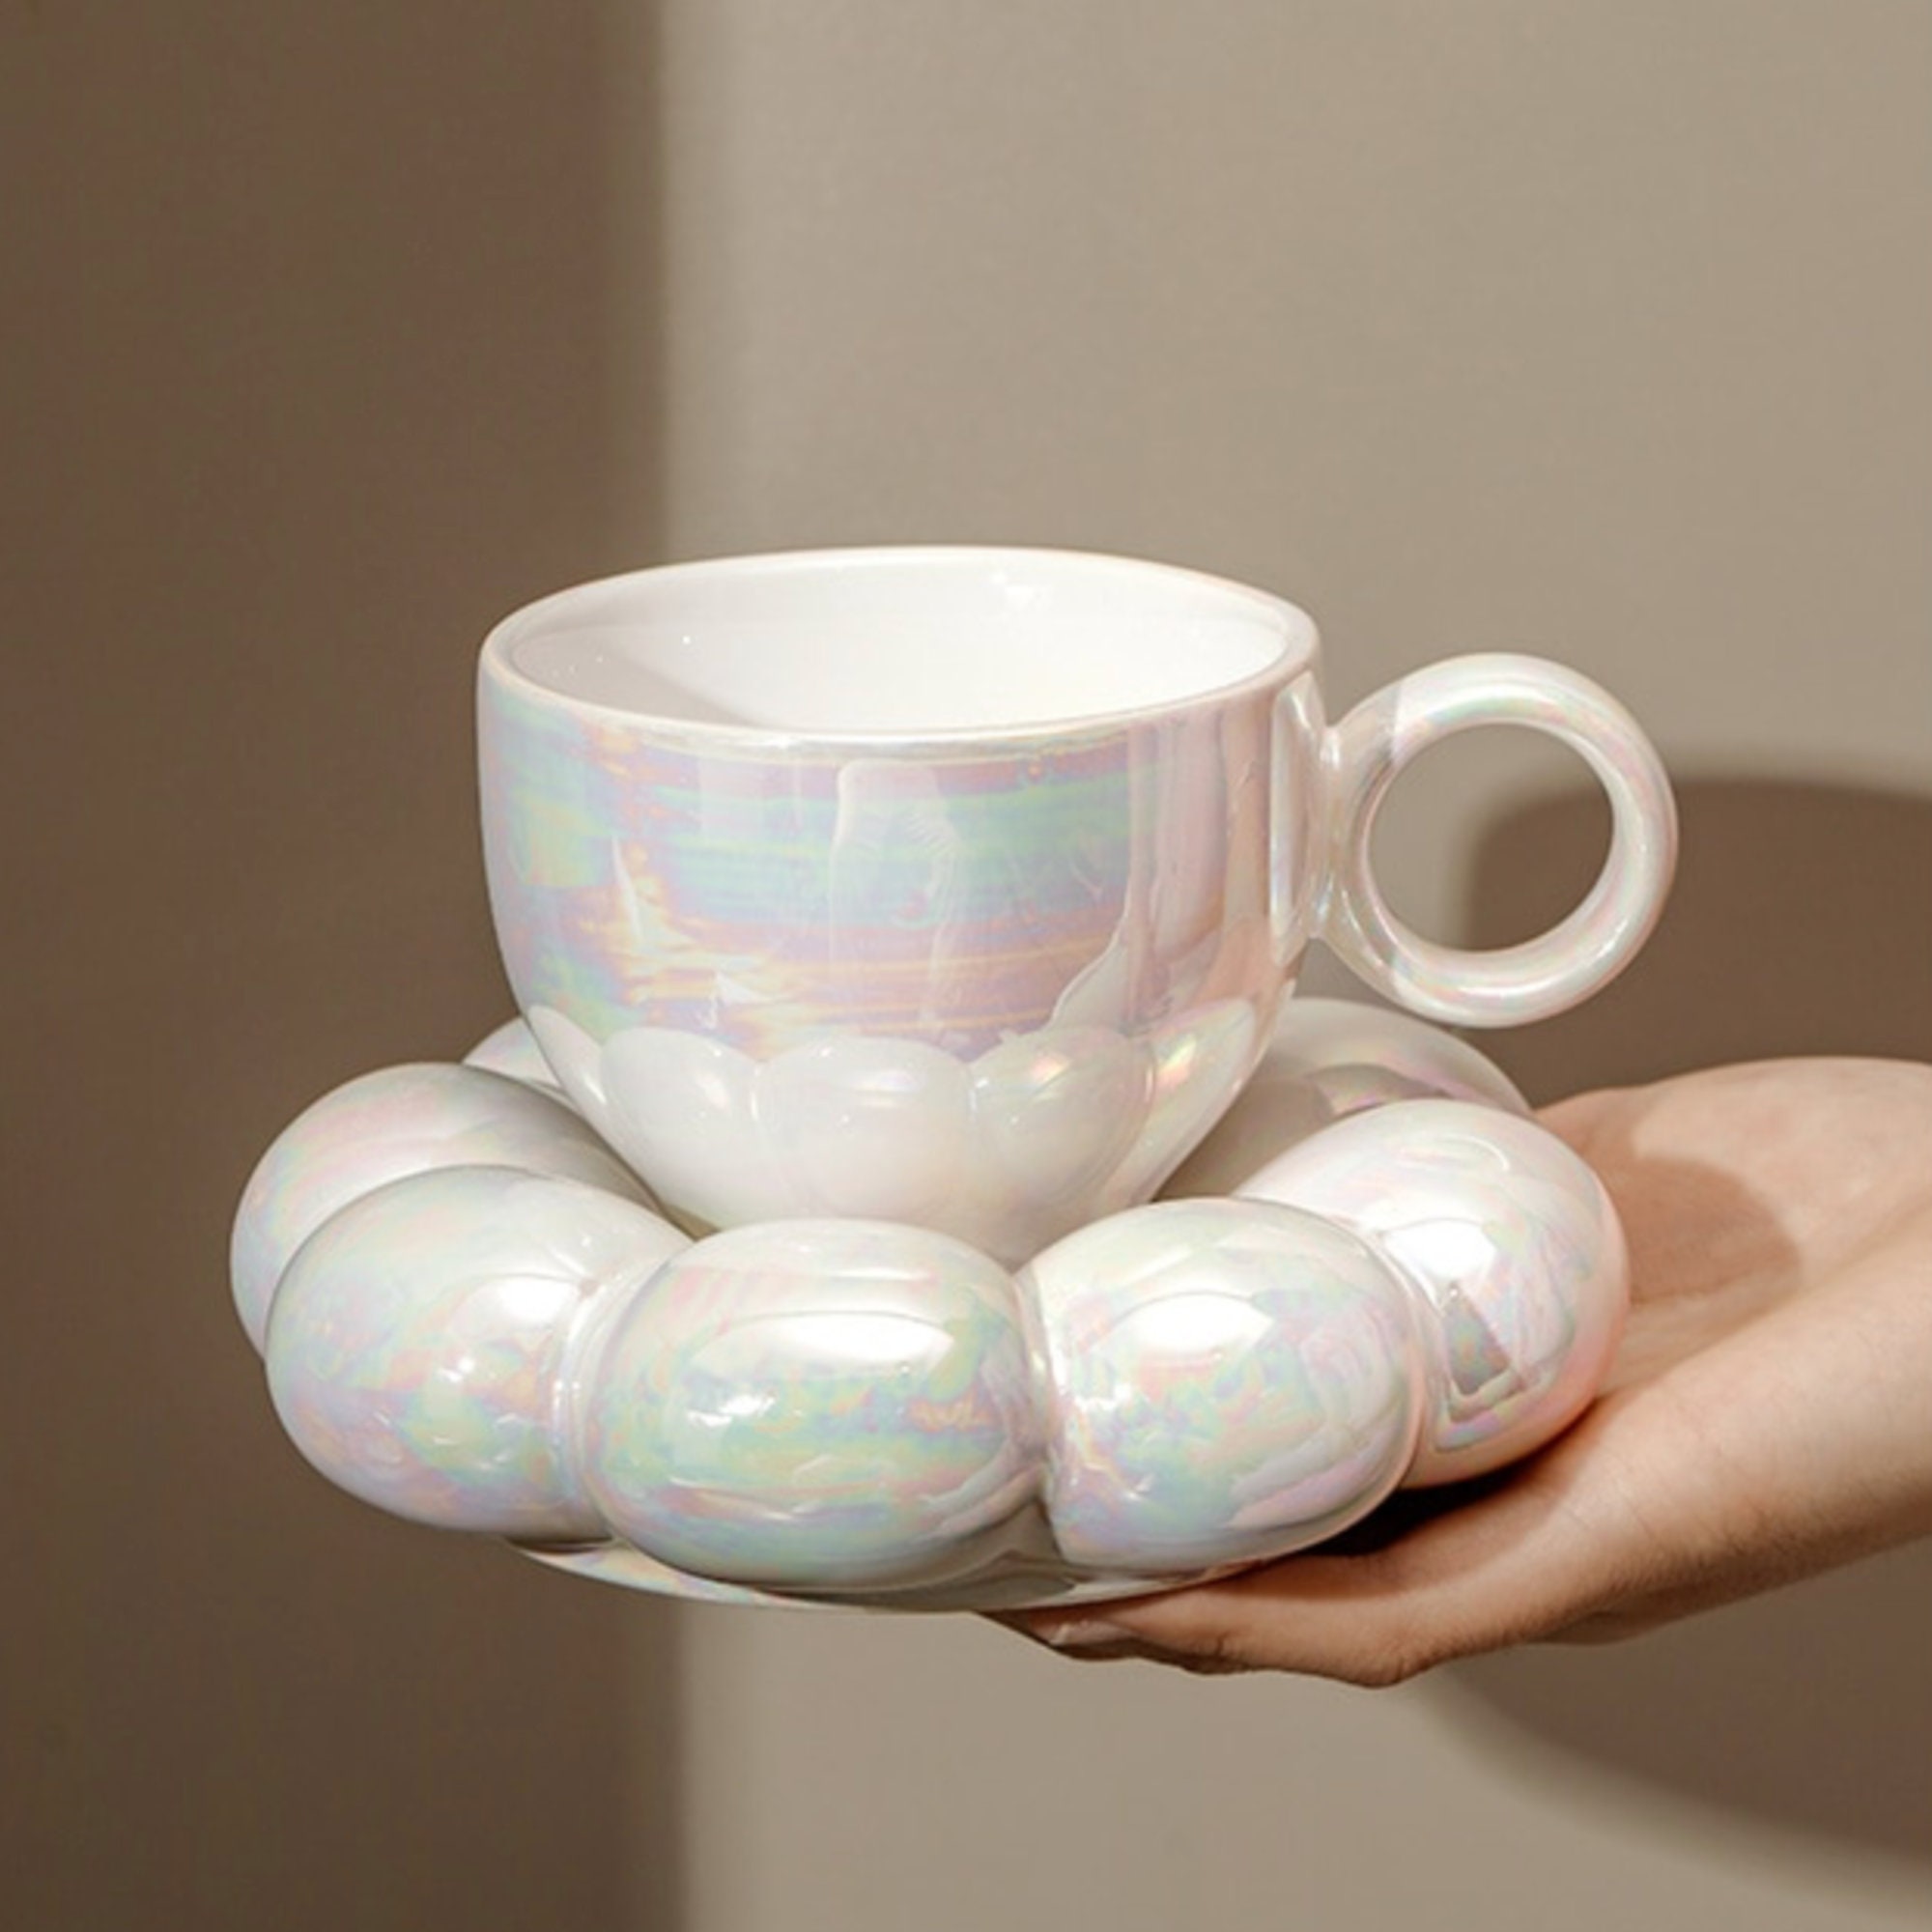 Artuxer Ceramic Cloud Coffee Mug,Cute Cup with